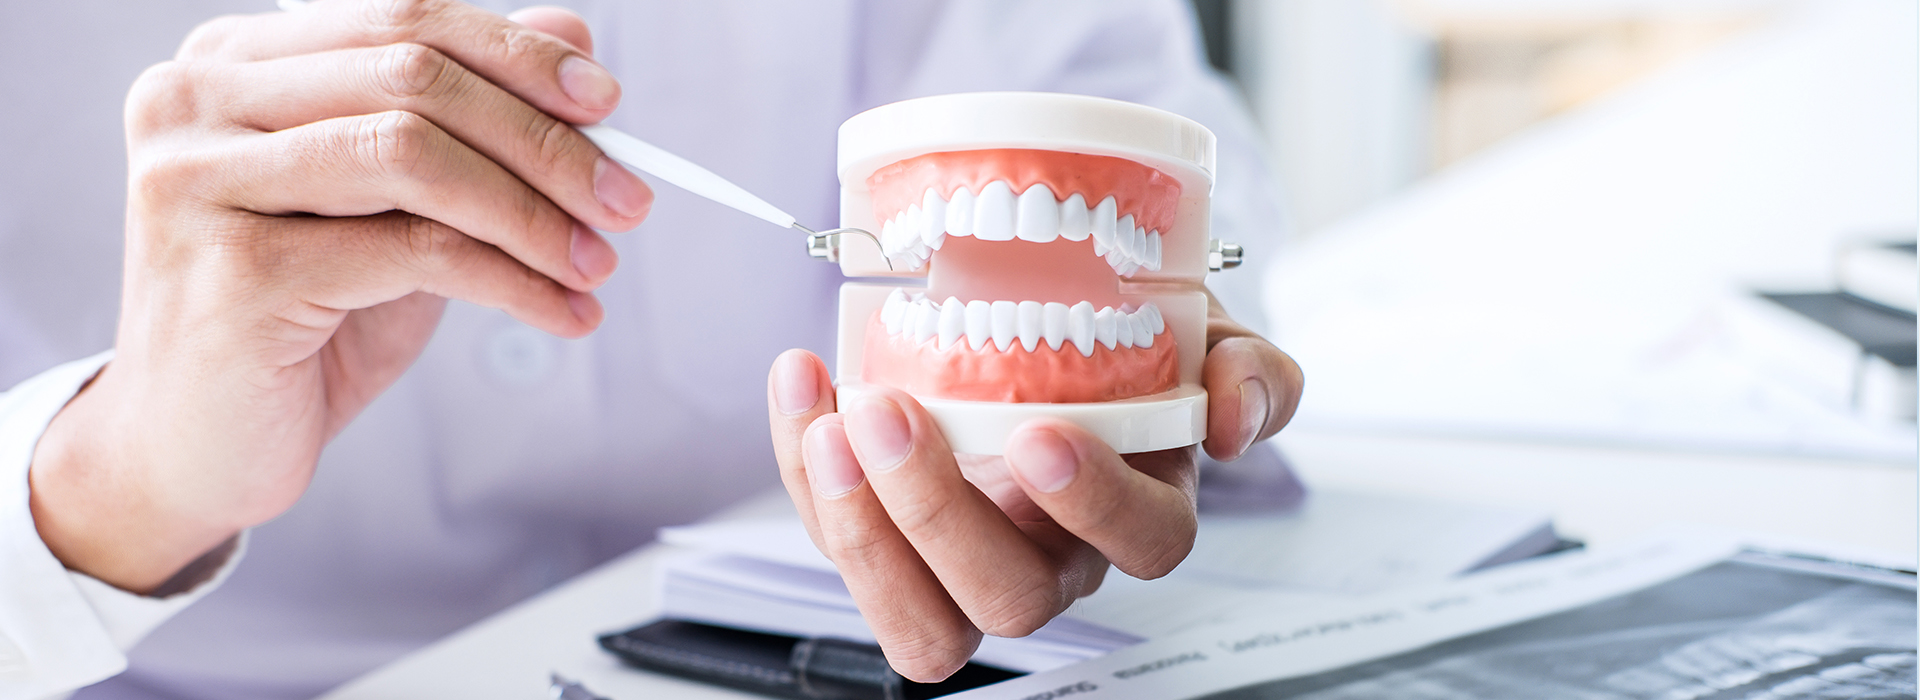 New Image Dentistry | TMJ Disorders, Implant Restorations and Sleep Apnea